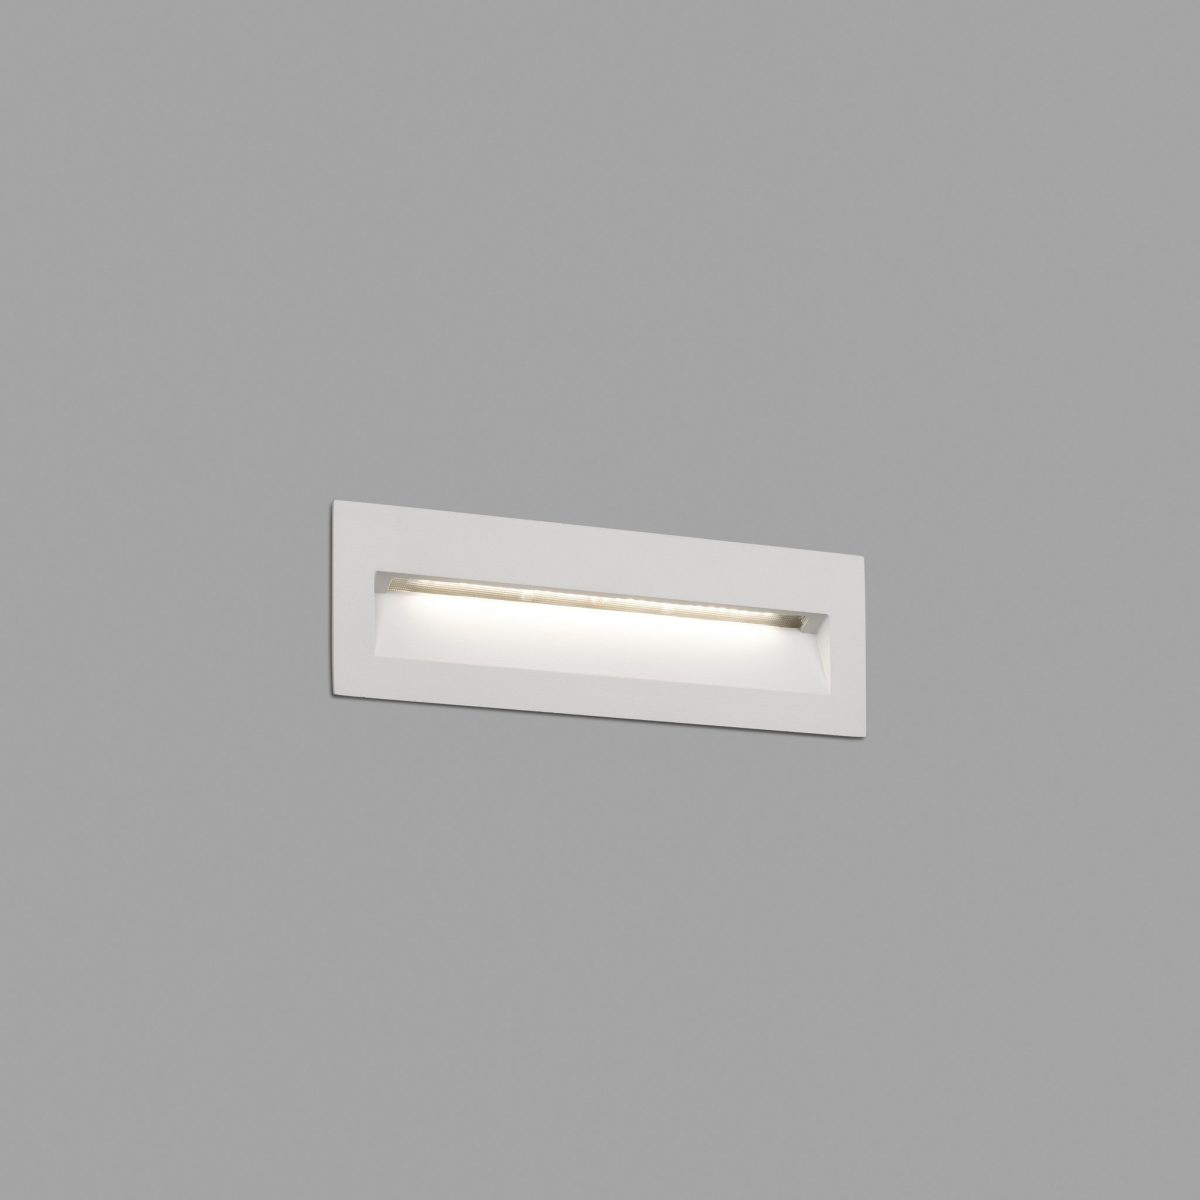 NAT LED Foco de Faro. Medidas: L 225 x A 75 x F 73 mm. Color: Blanco